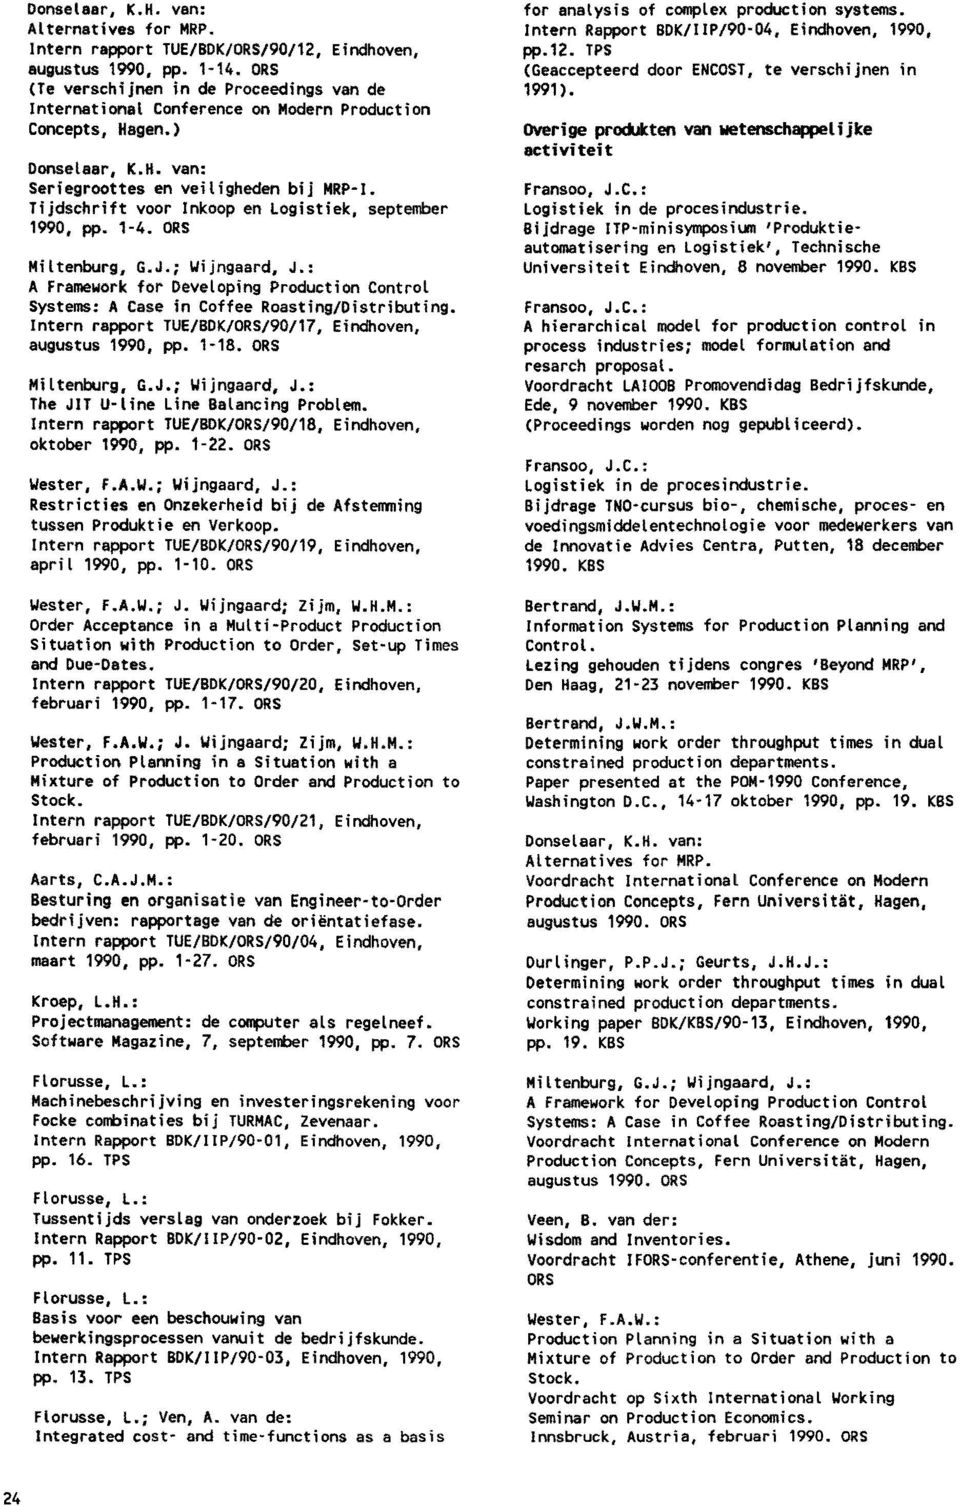 Tijdschrift voor lnkoop en logistiek, september 1990, pp. 1-4. ORS Miltenburg, G.J.; Wijngaard, J.: A Framework for Developing Production Control Systems: A Case in Coffee Roasting/Distributing.